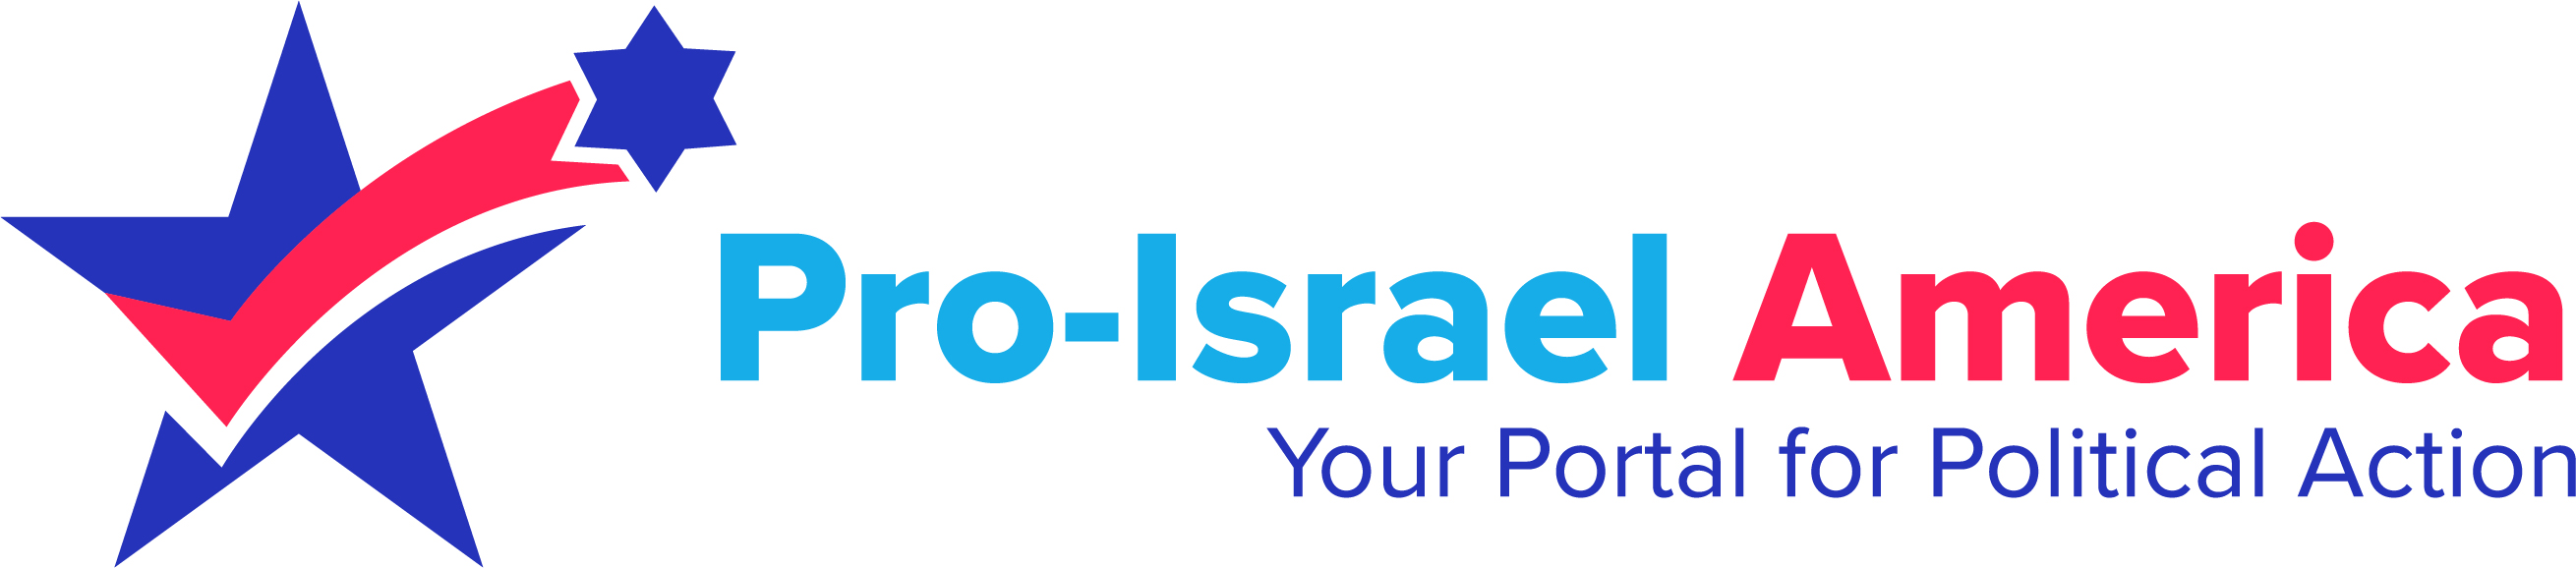 pro-israel logo color - red checkmark (1)